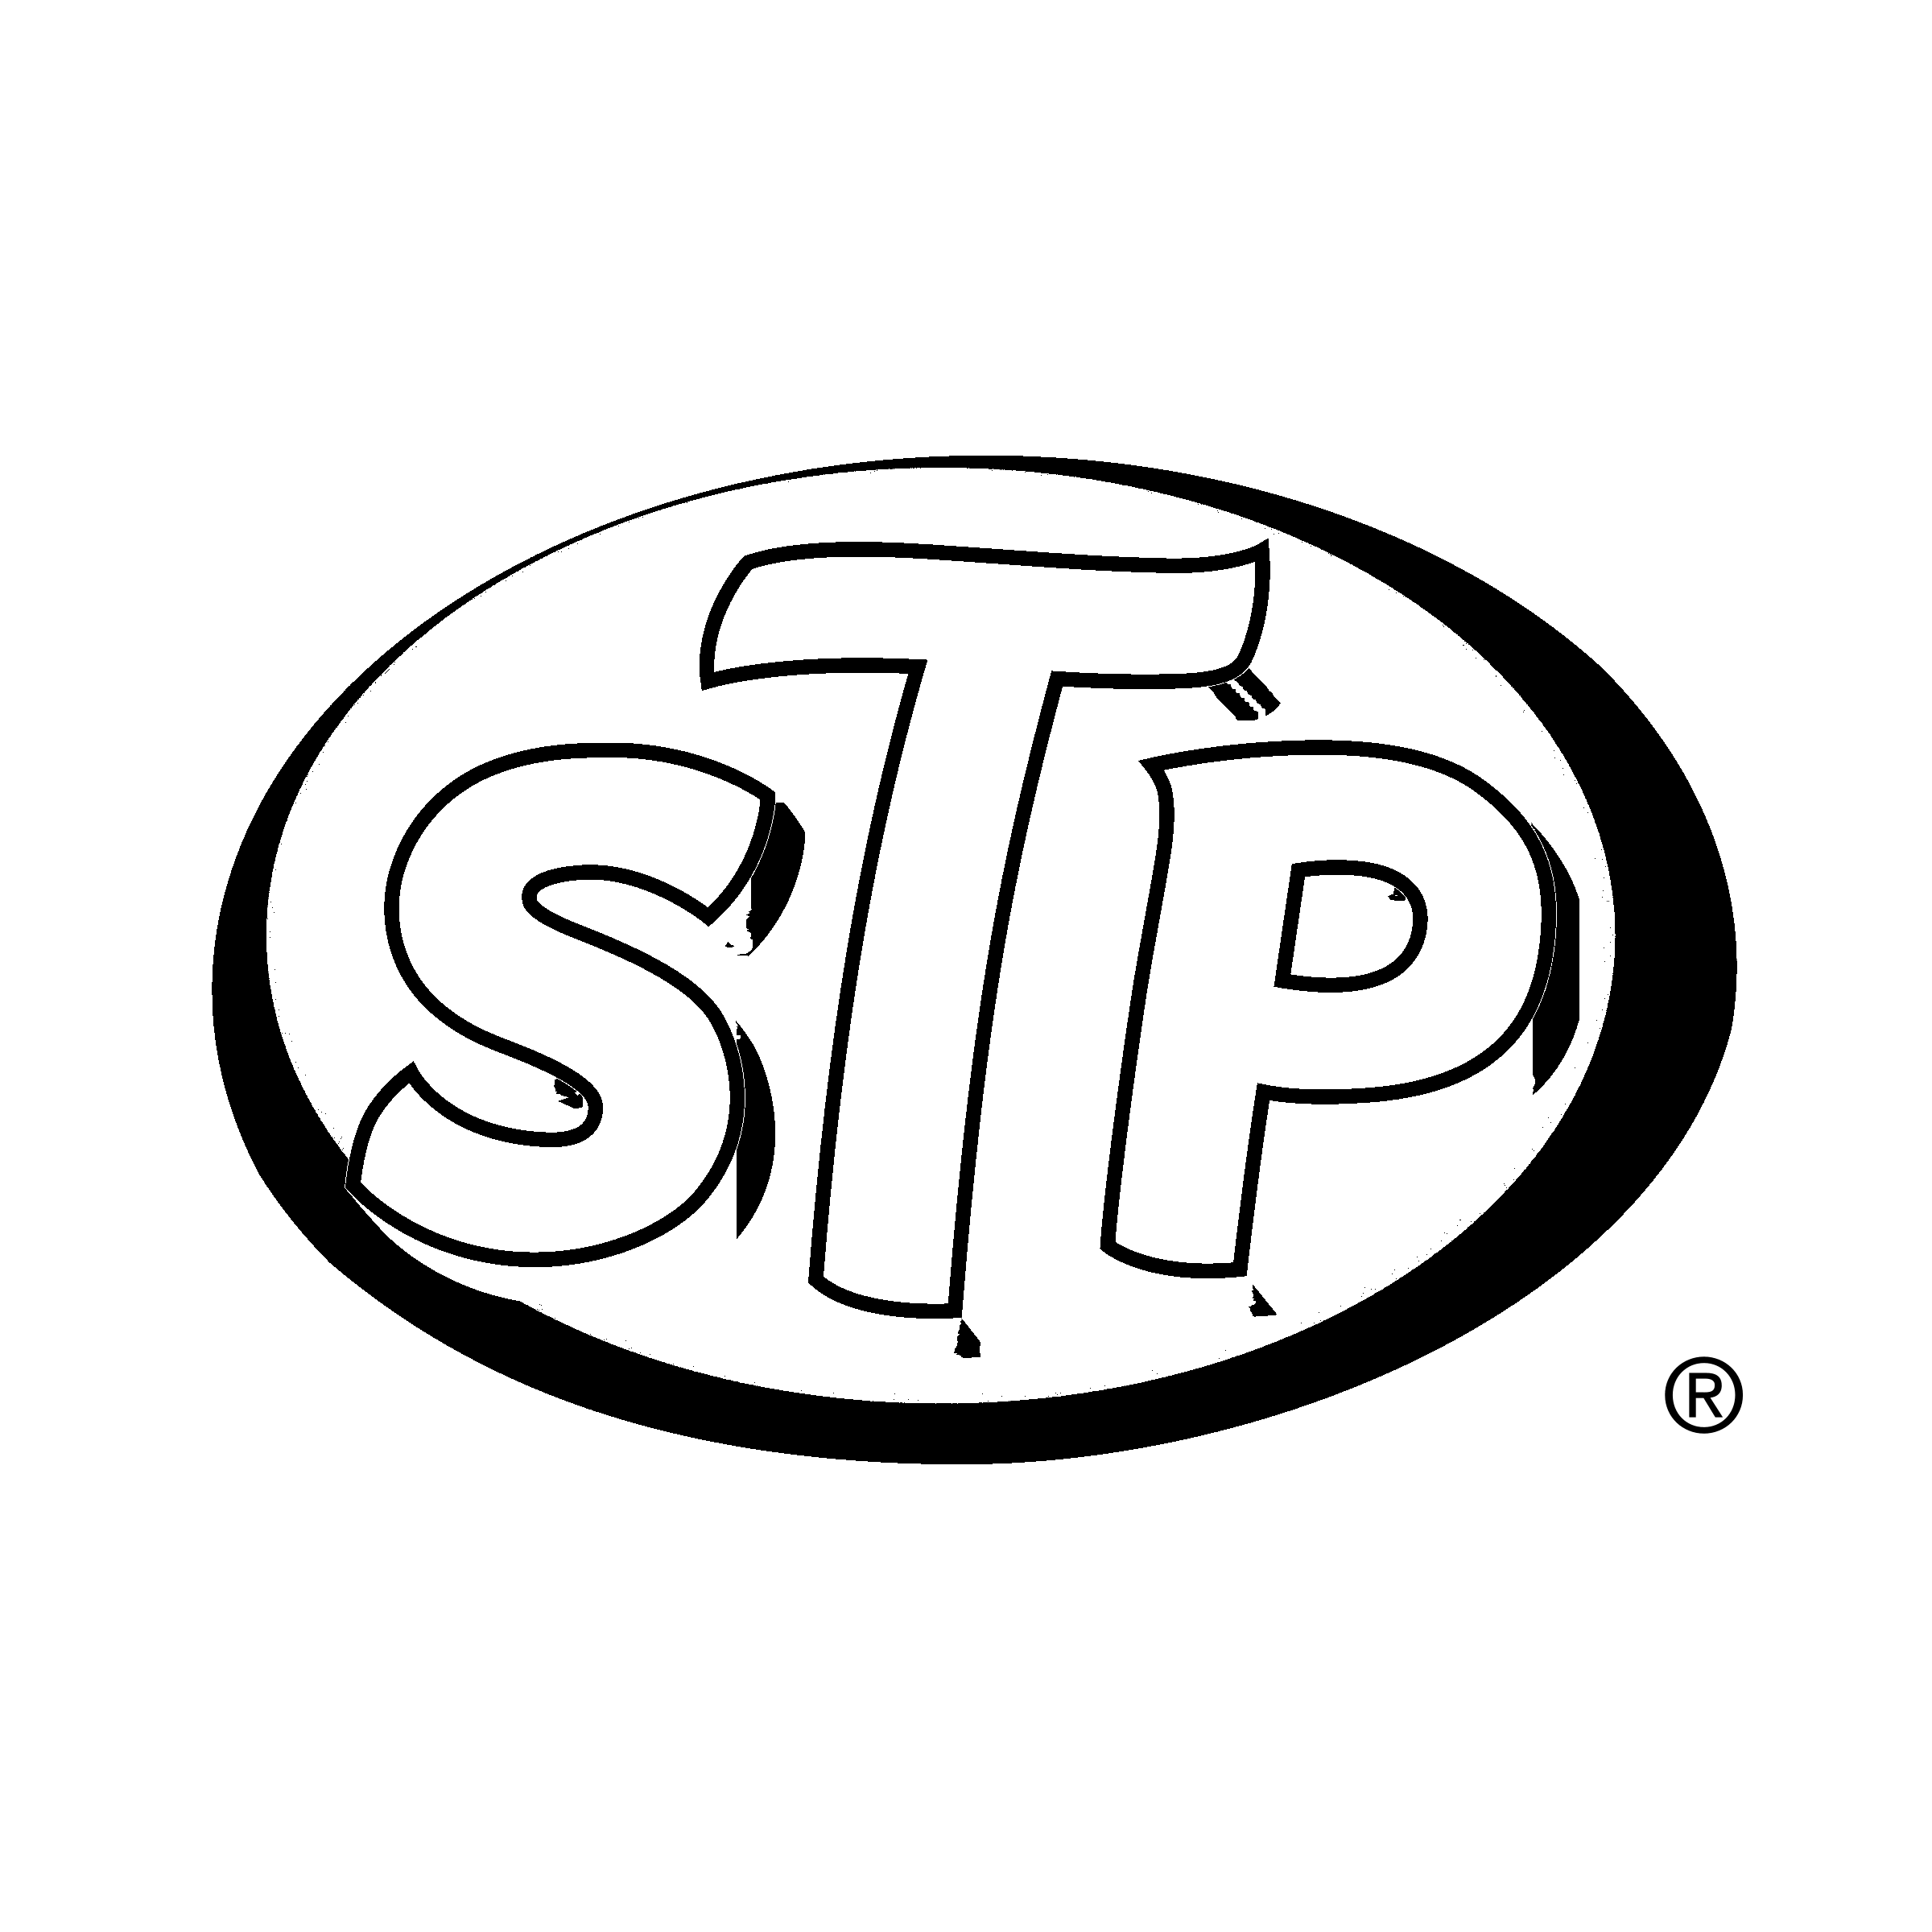 STP Logo - STP Logo PNG Transparent & SVG Vector - Freebie Supply